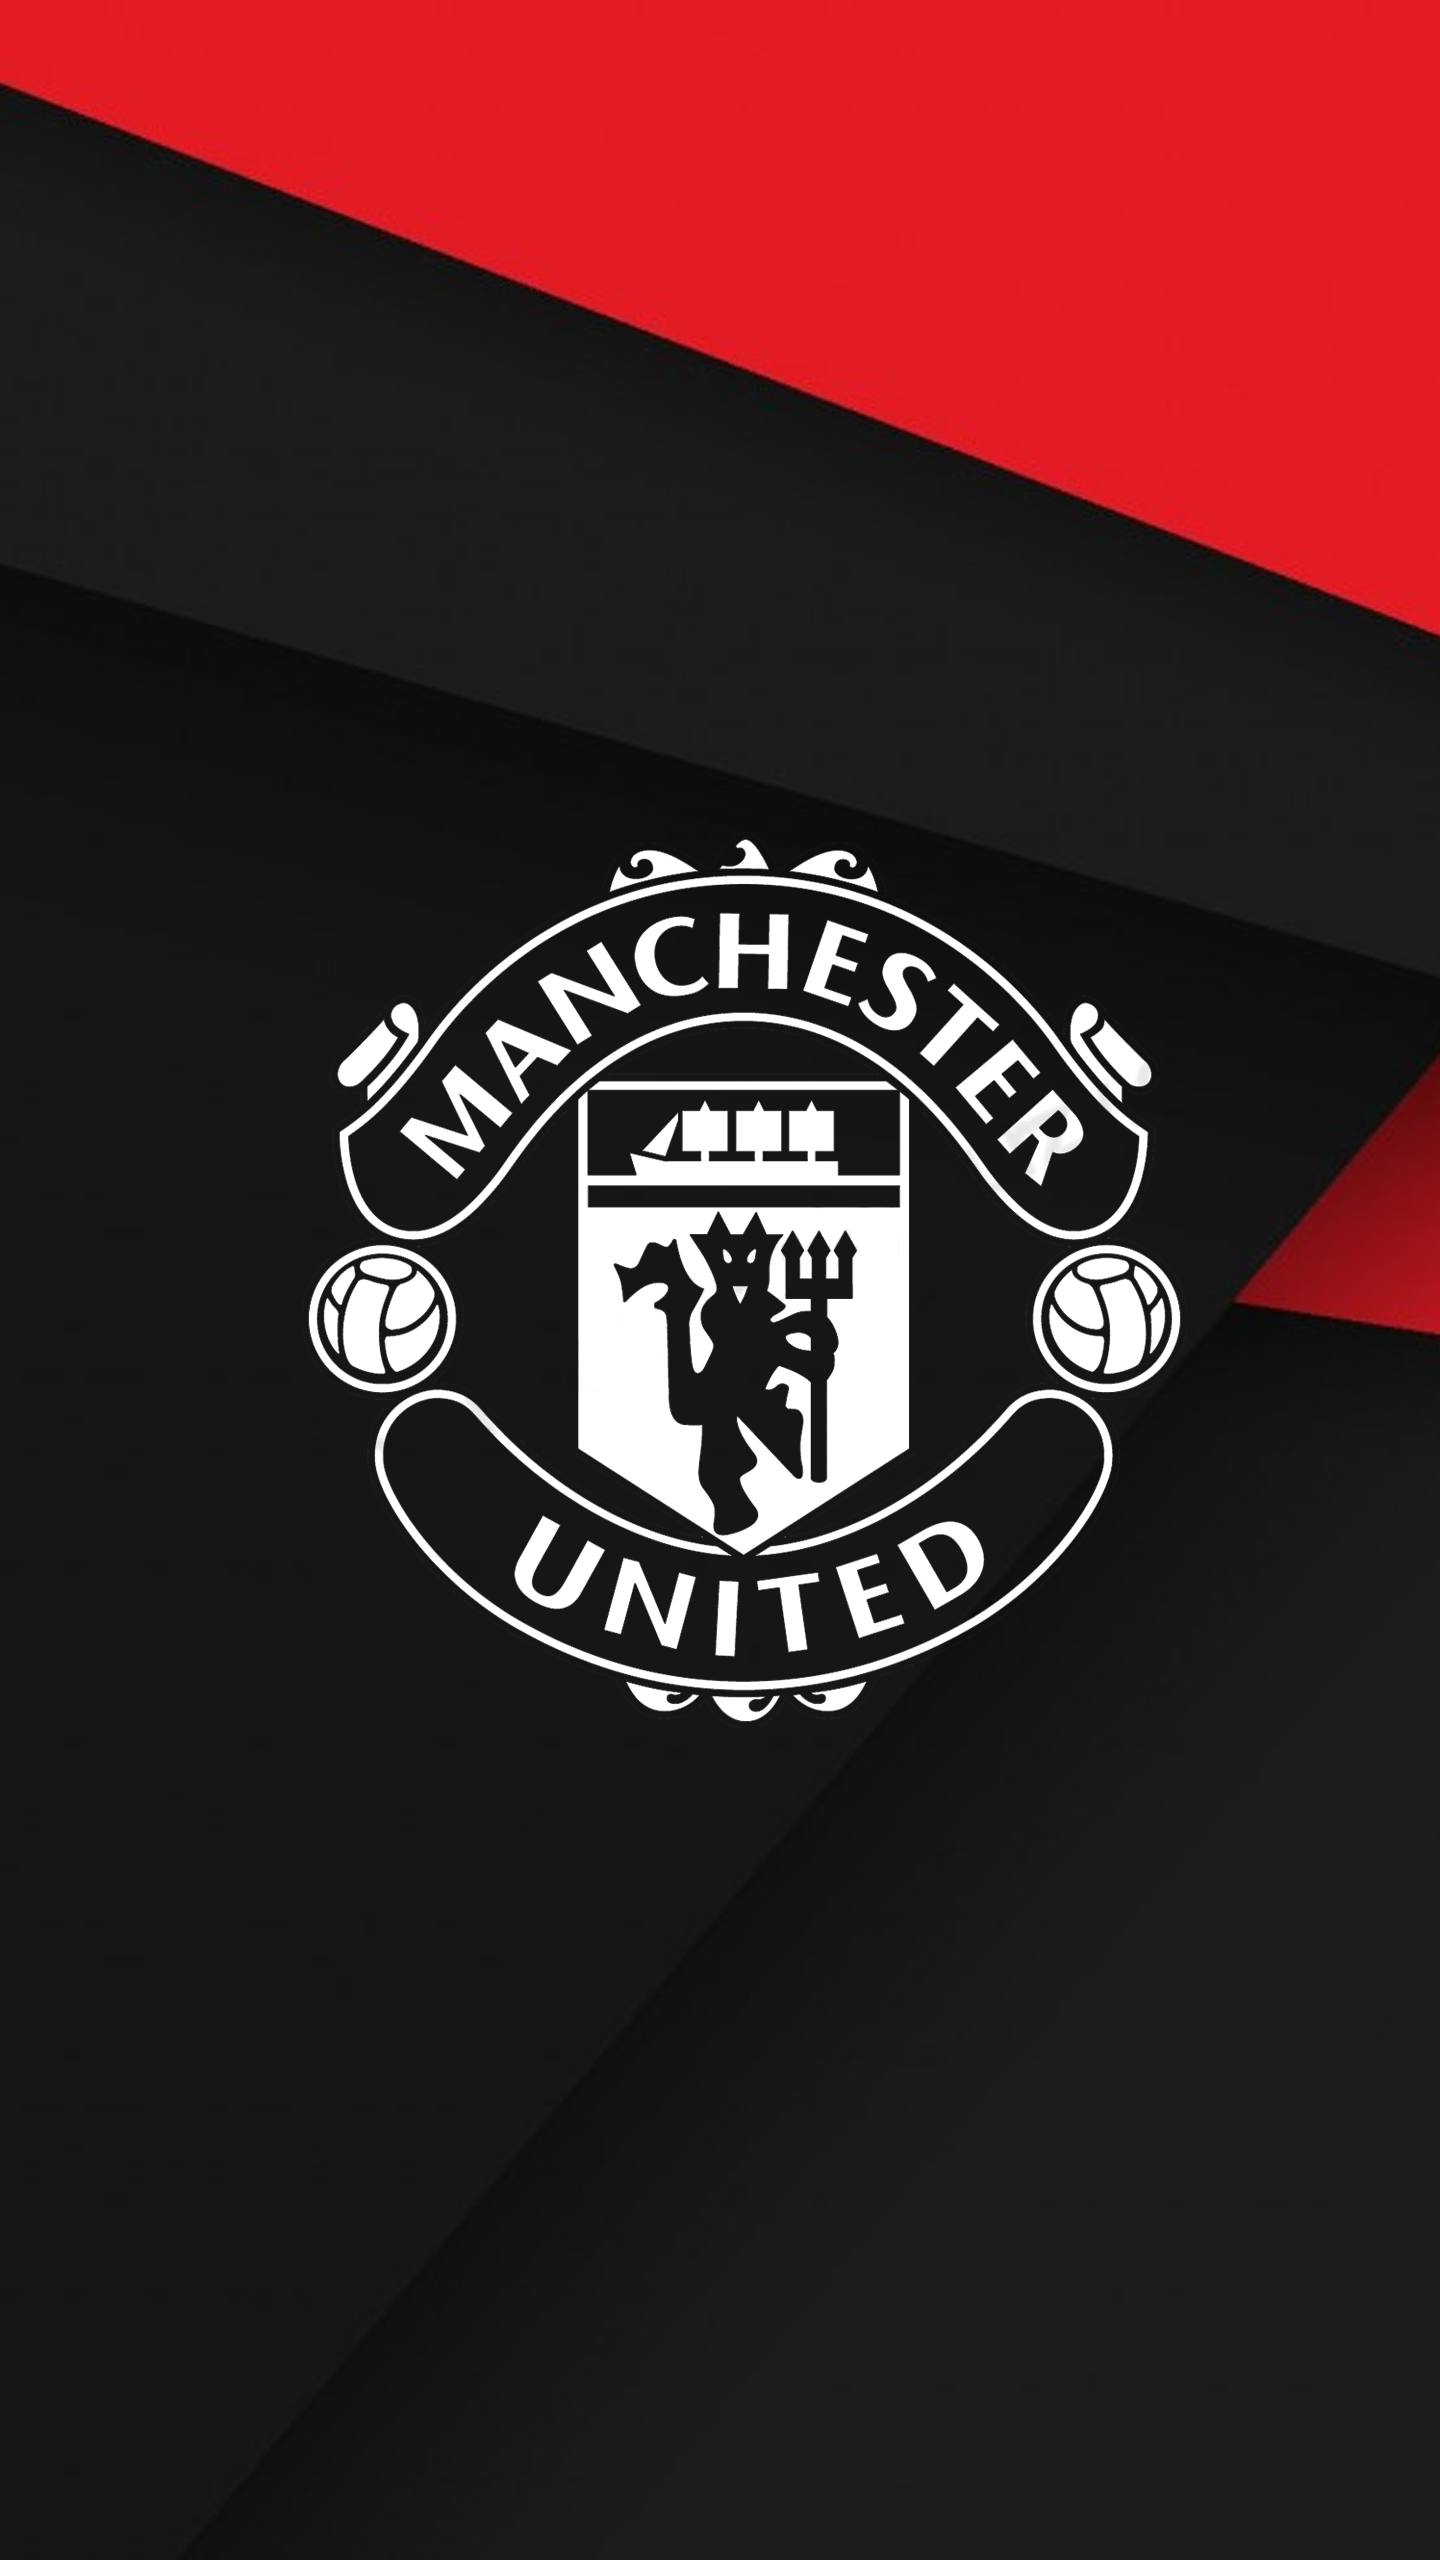 1080p Manchester United Wallpaper Hd 2018 - HD Wallpaper 